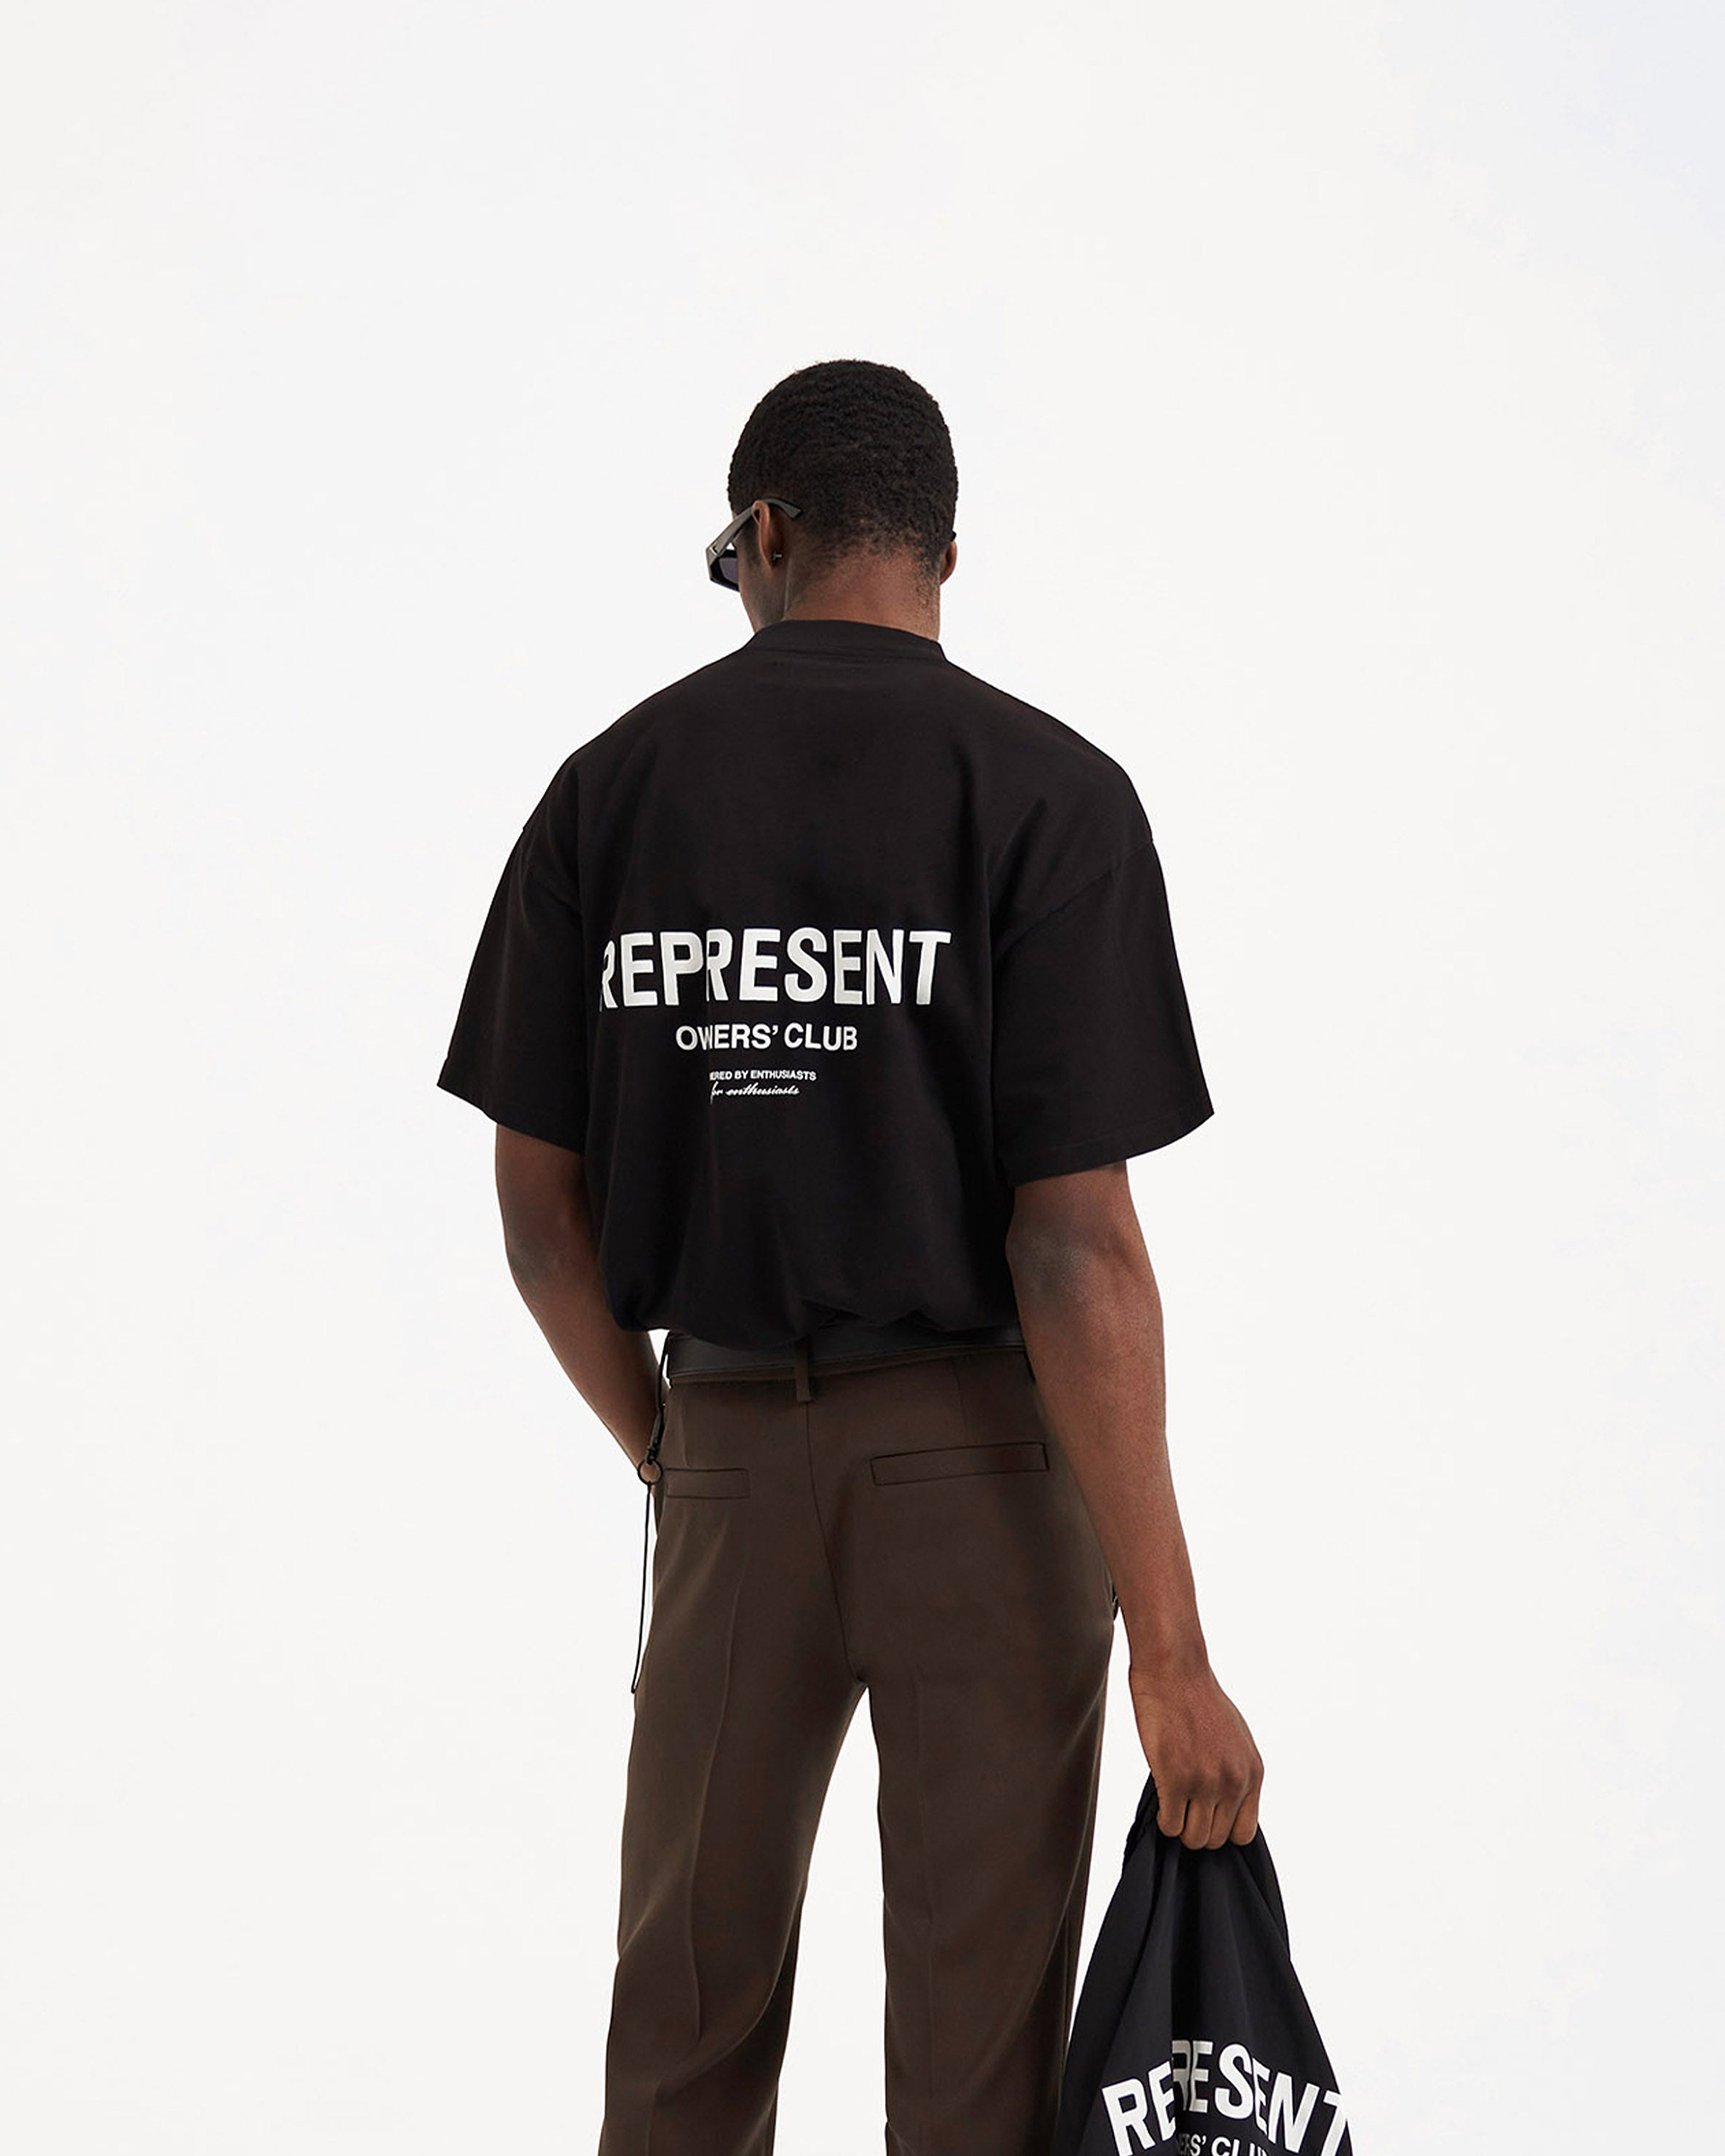 Represent - Black Cotton Owners Club T-Shirt